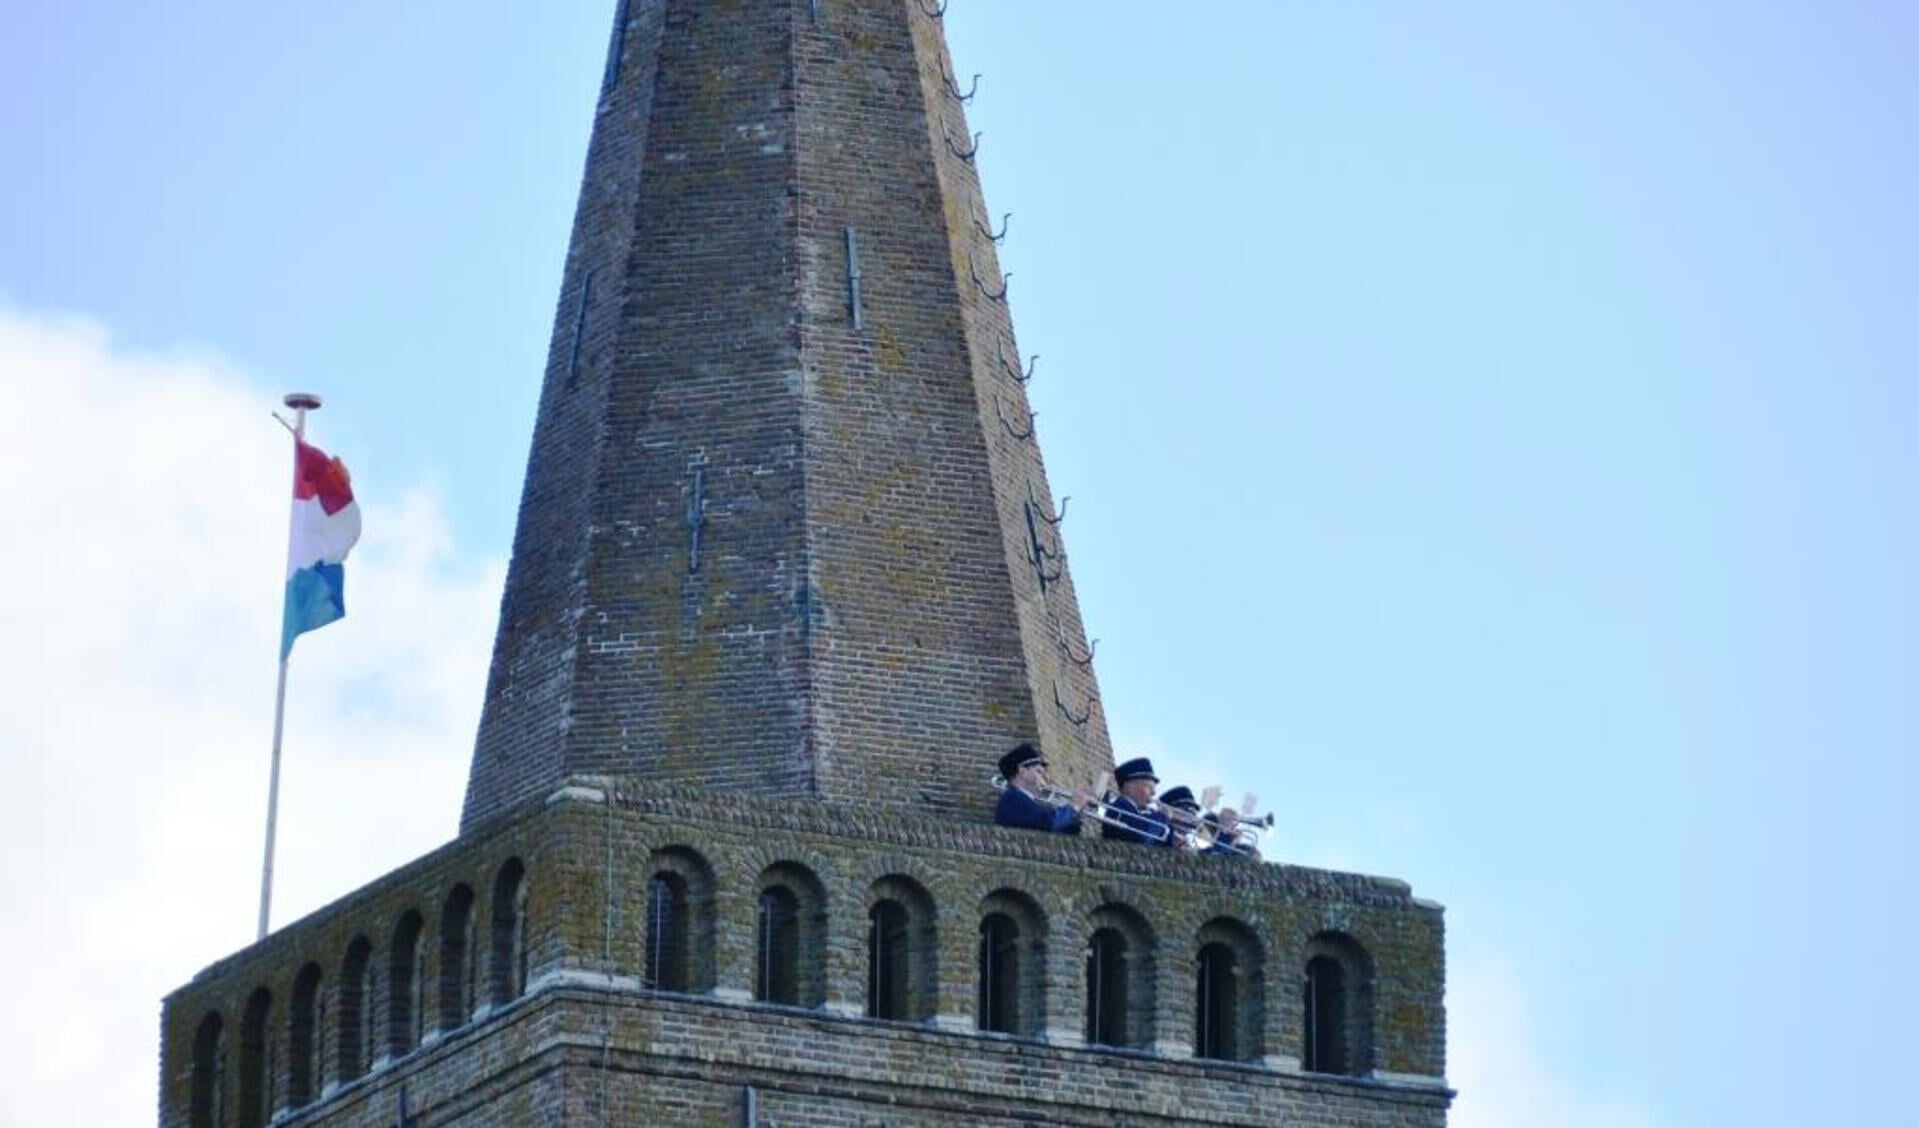 KTF vanaf de kerktoren. Foto genomen vóór het coronatijdperk.